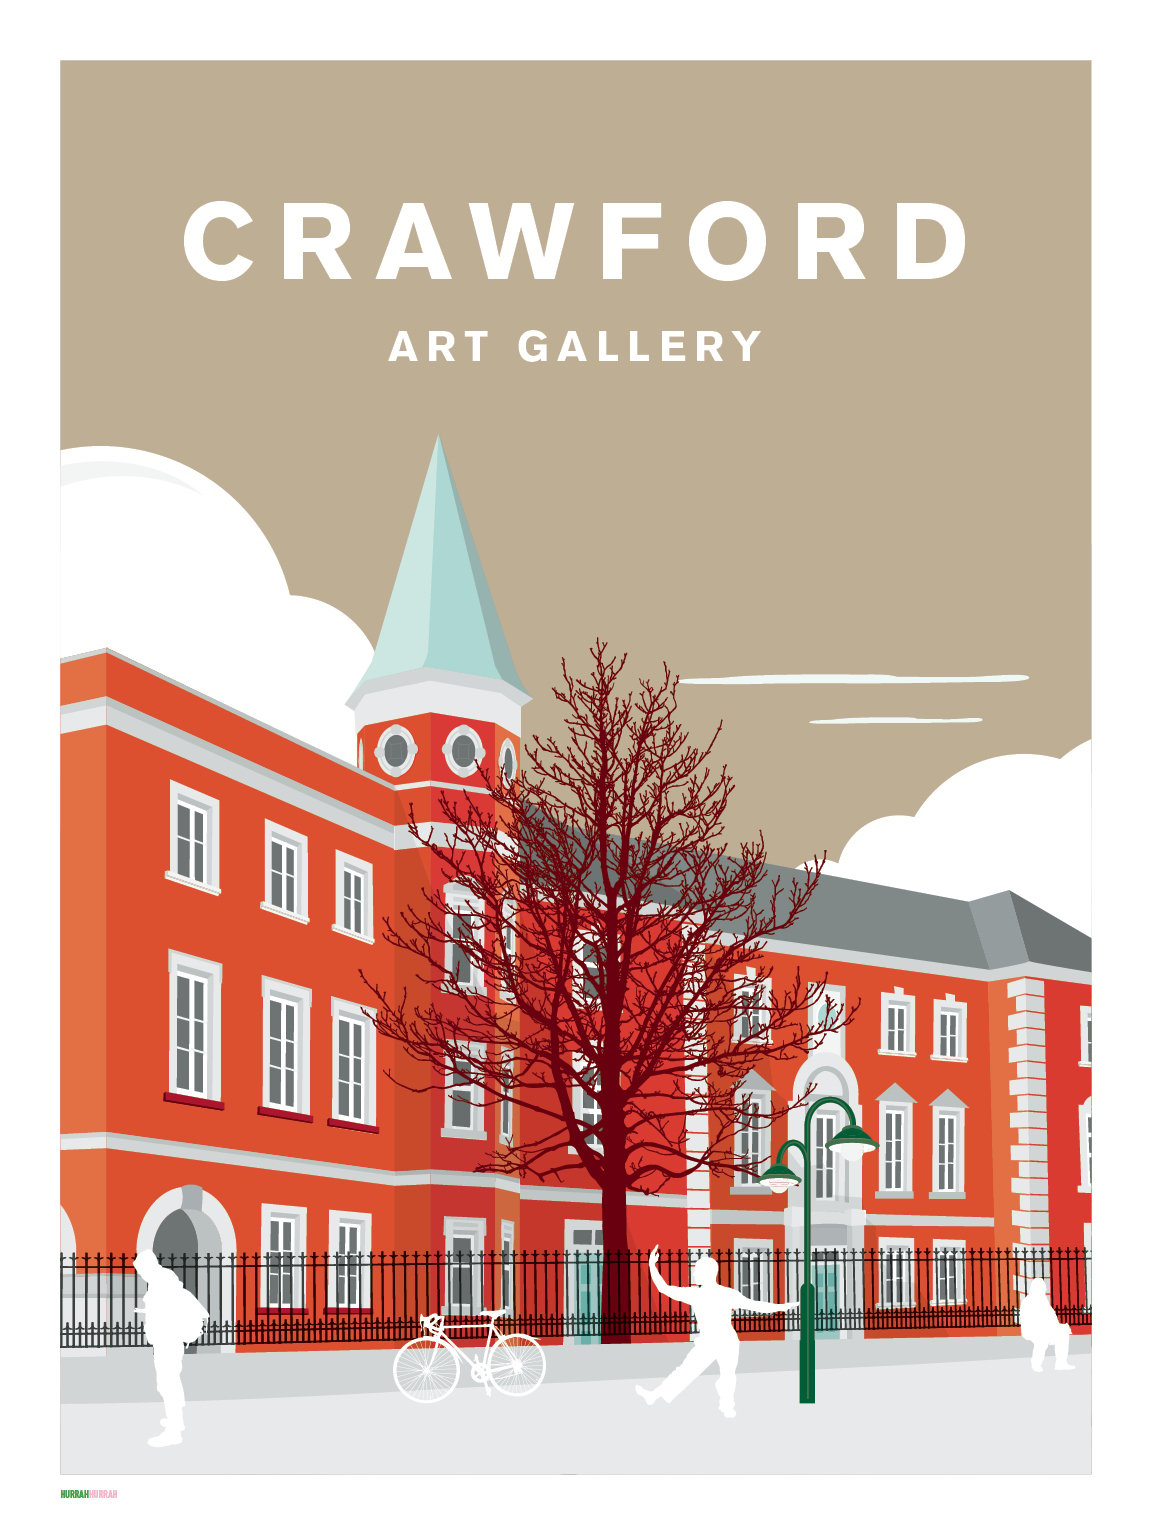 Crawford Art Gallery